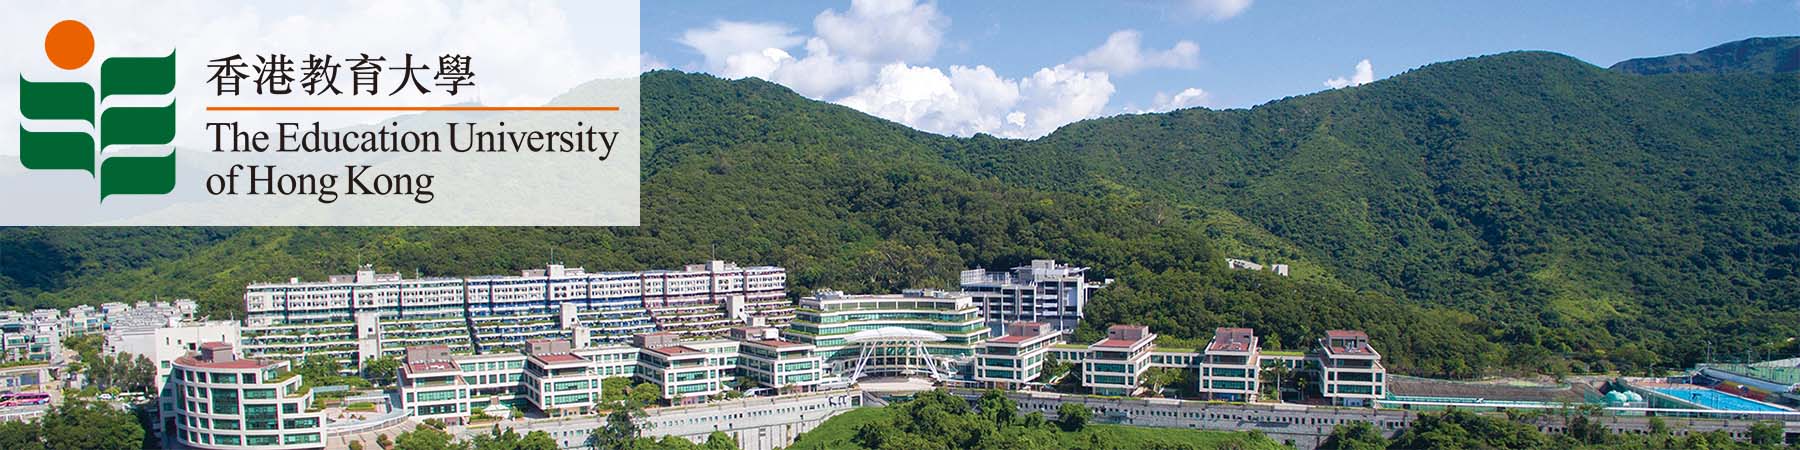 The Education University of Hong Kong